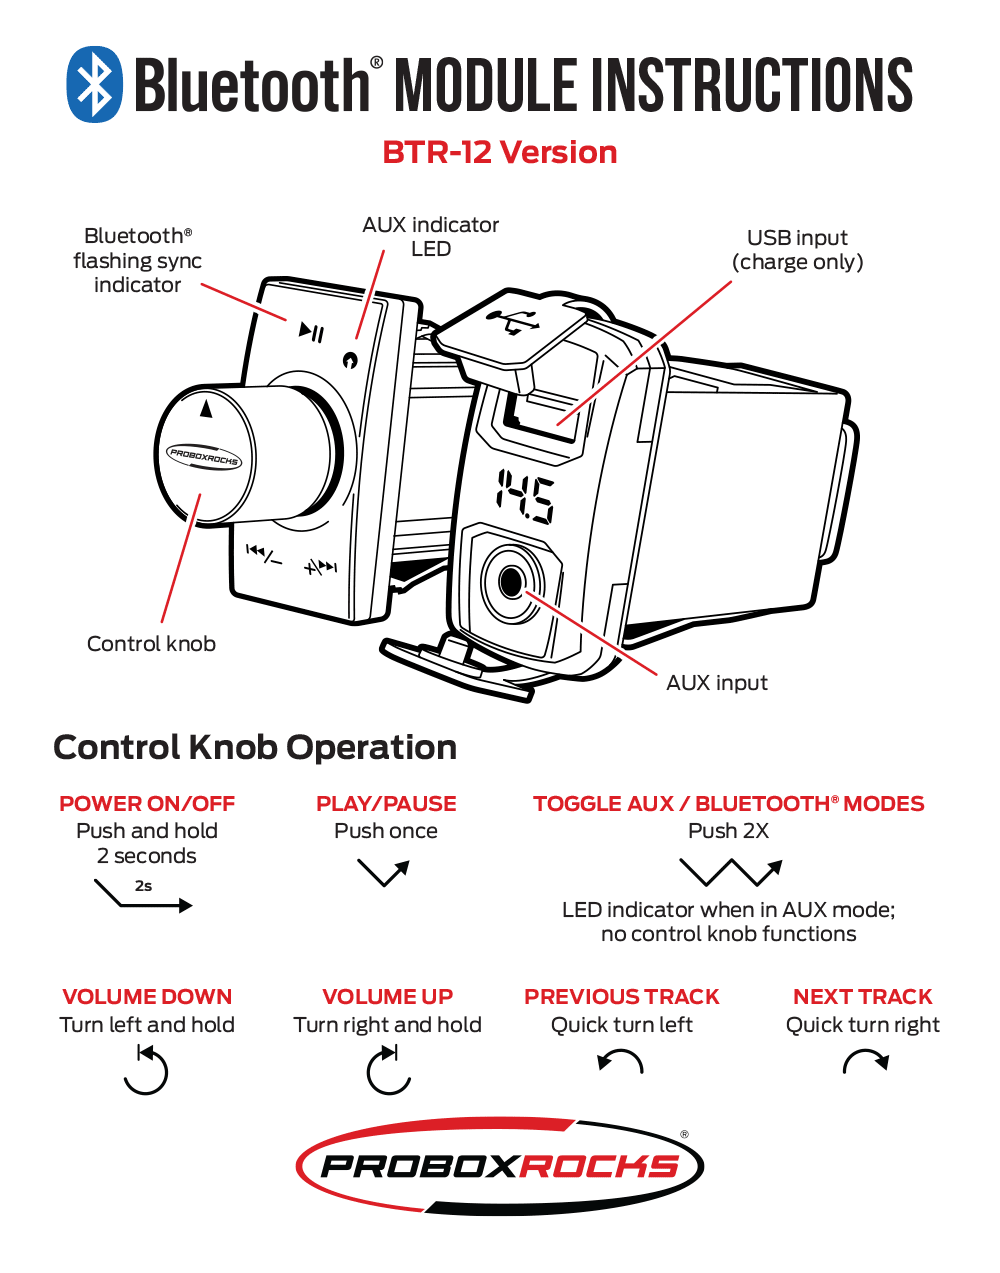 BTR-12 module instructions